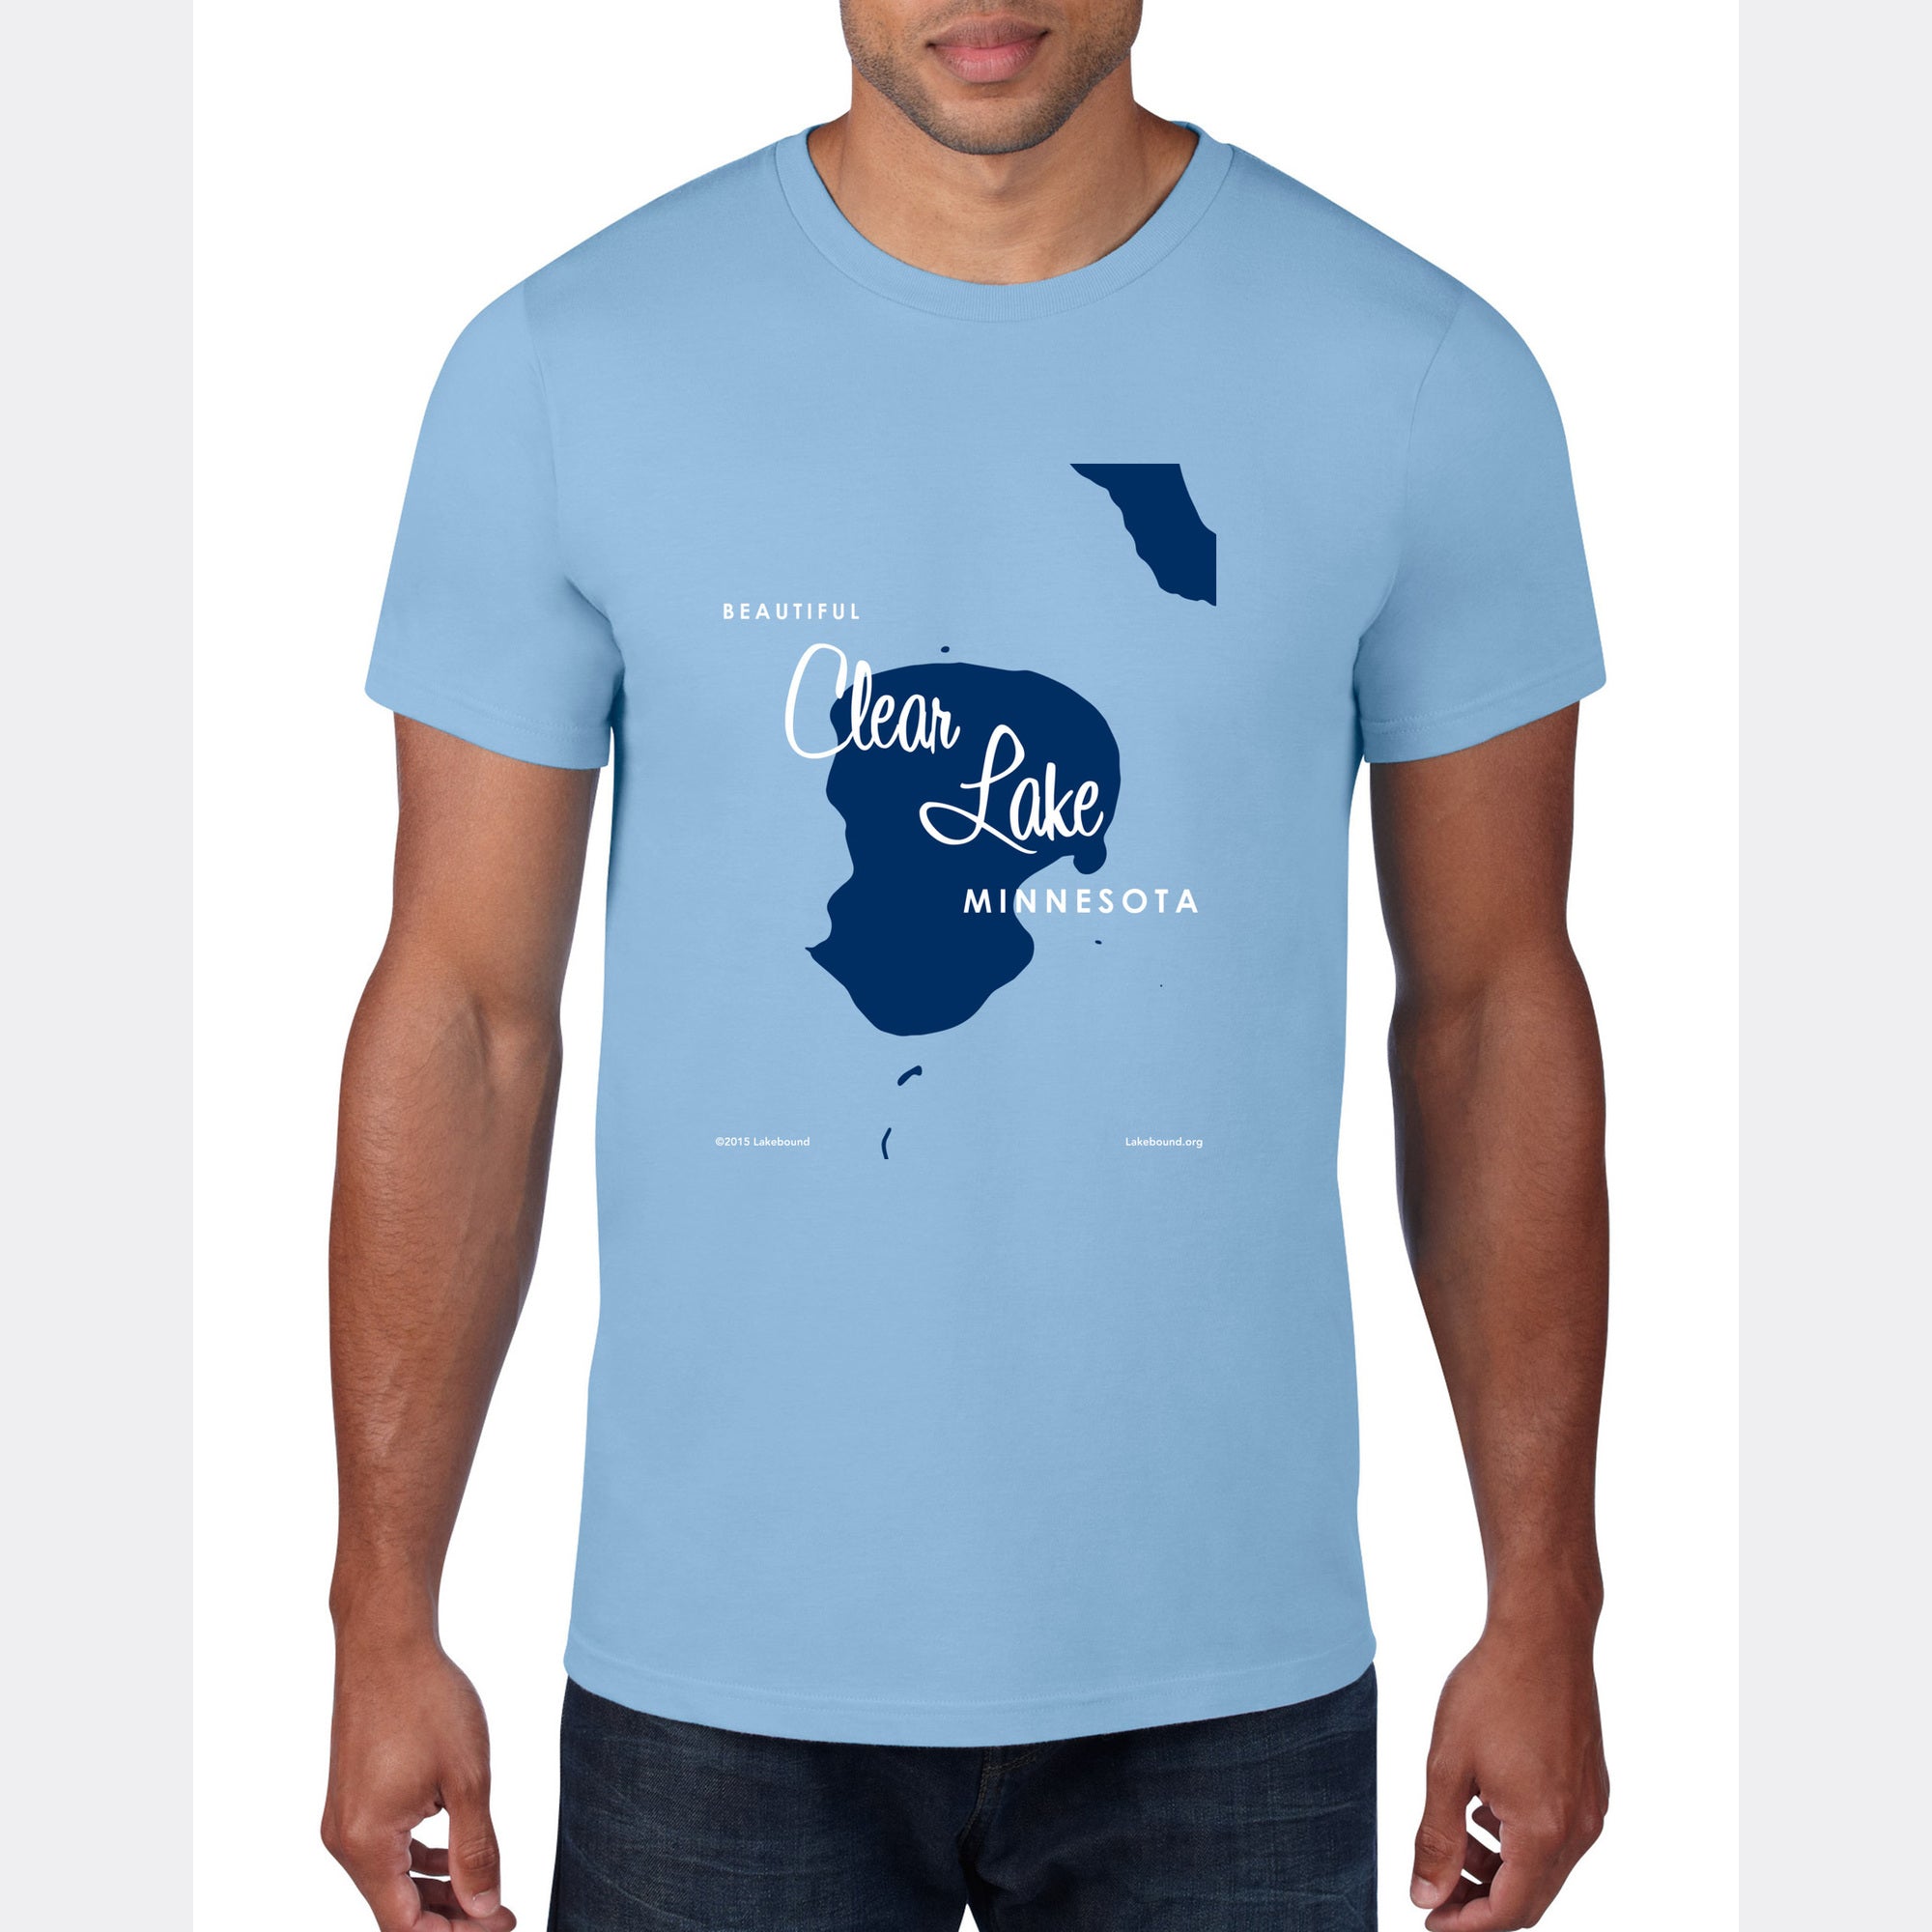 Clear Lake Minnesota, T-Shirt